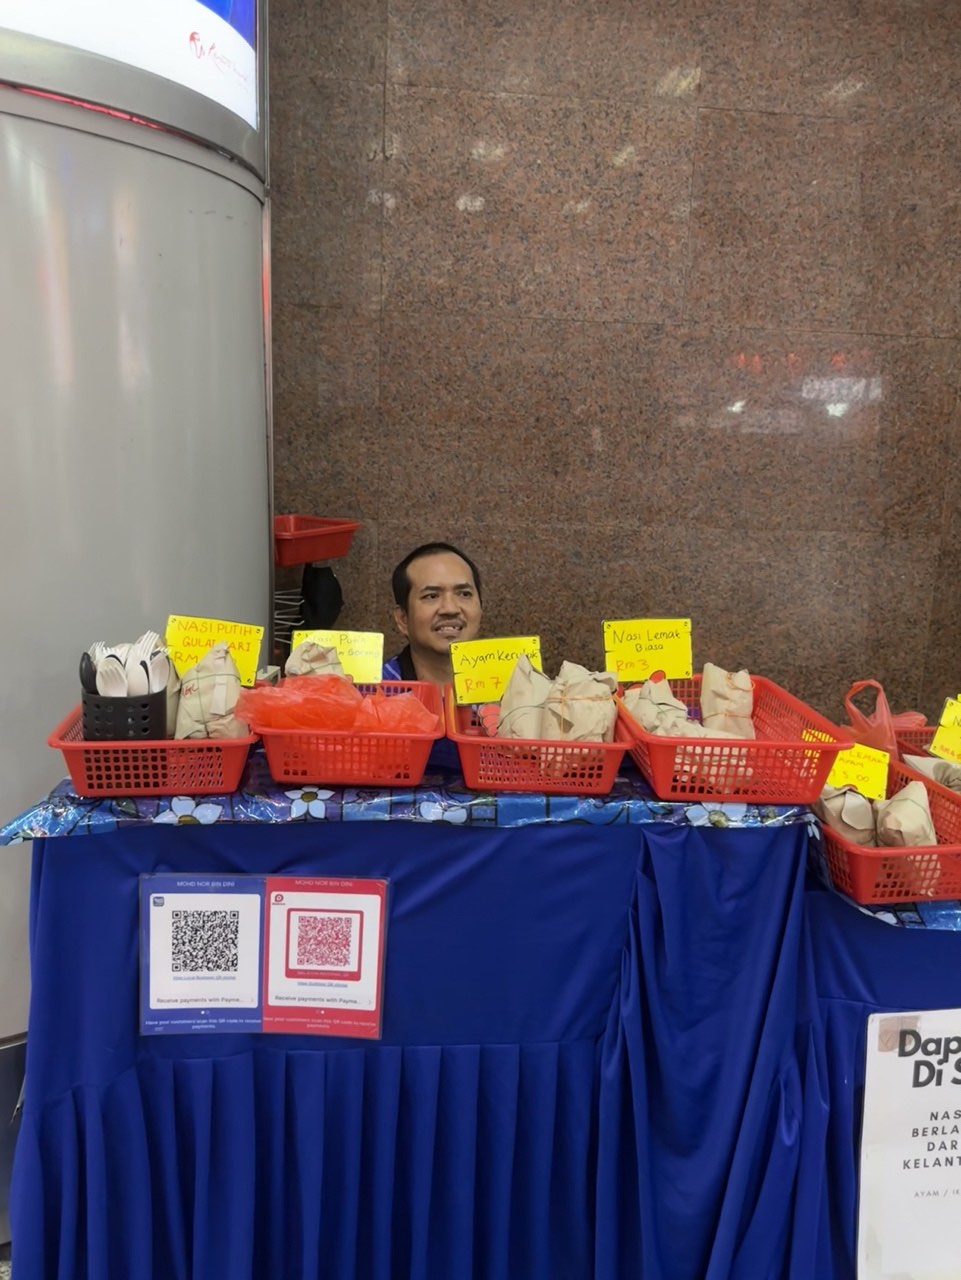 Mohd selling nasi lemak near nu sentral entrance